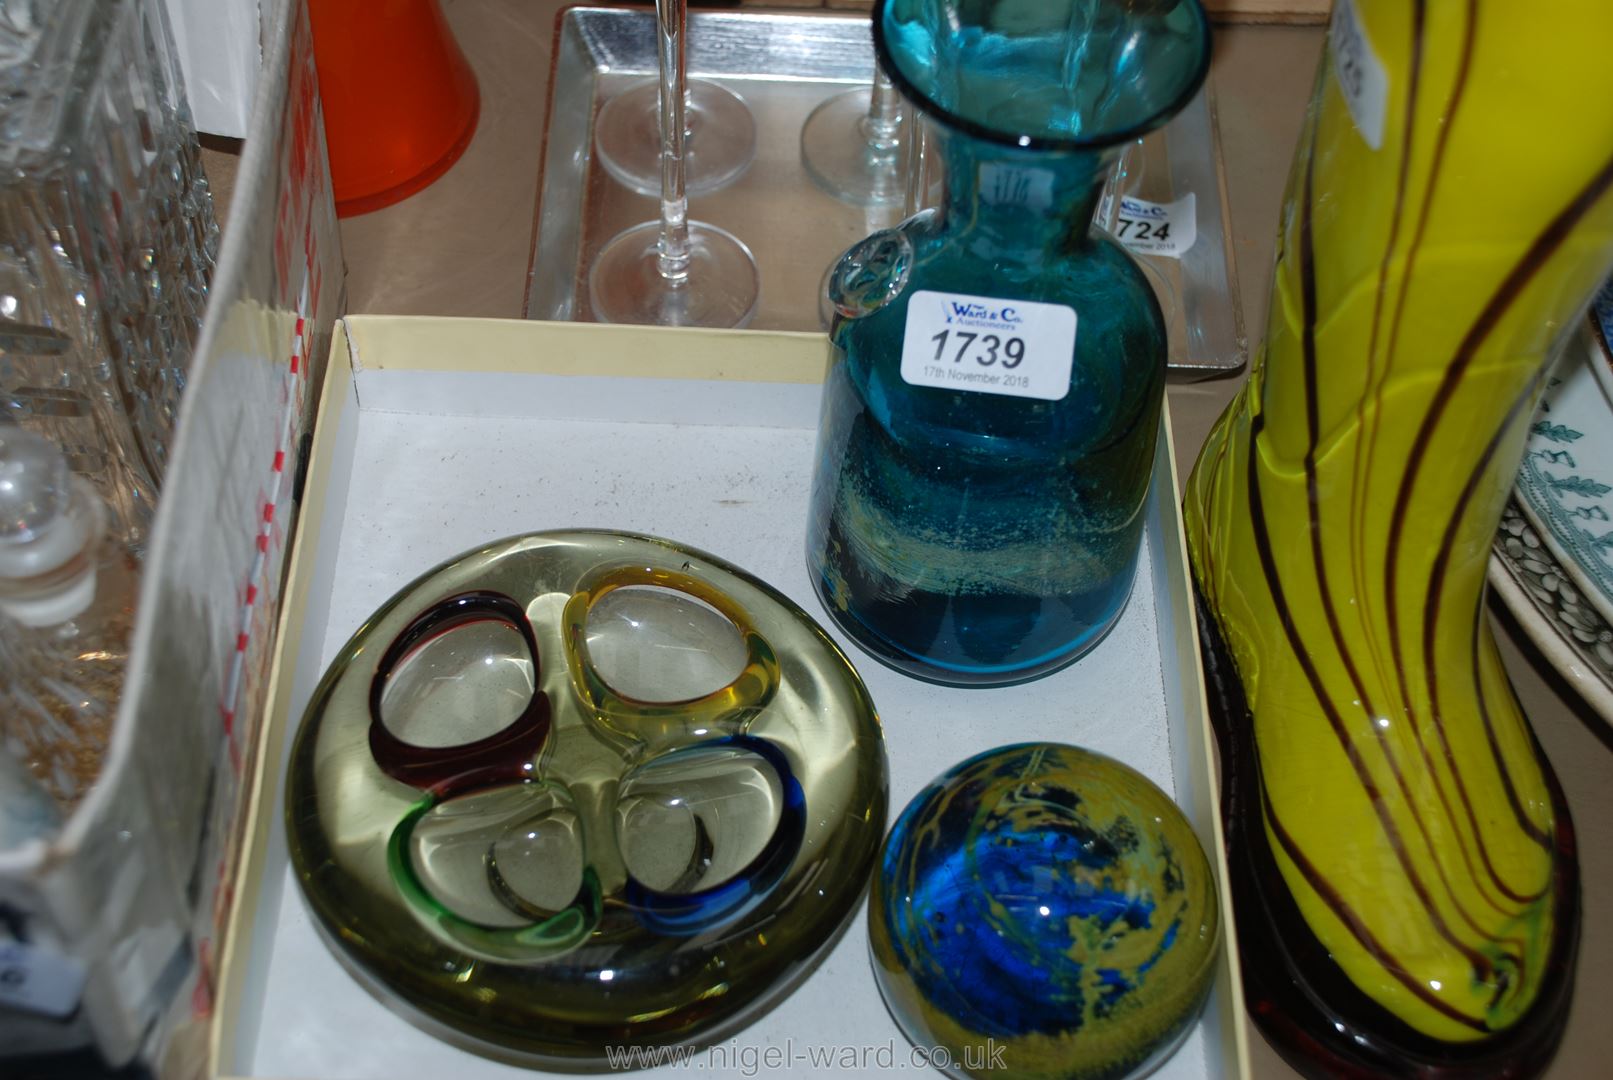 A Mdina Maltese cross design, blue mottled glass Vase, a Mdina paperweight, etc.